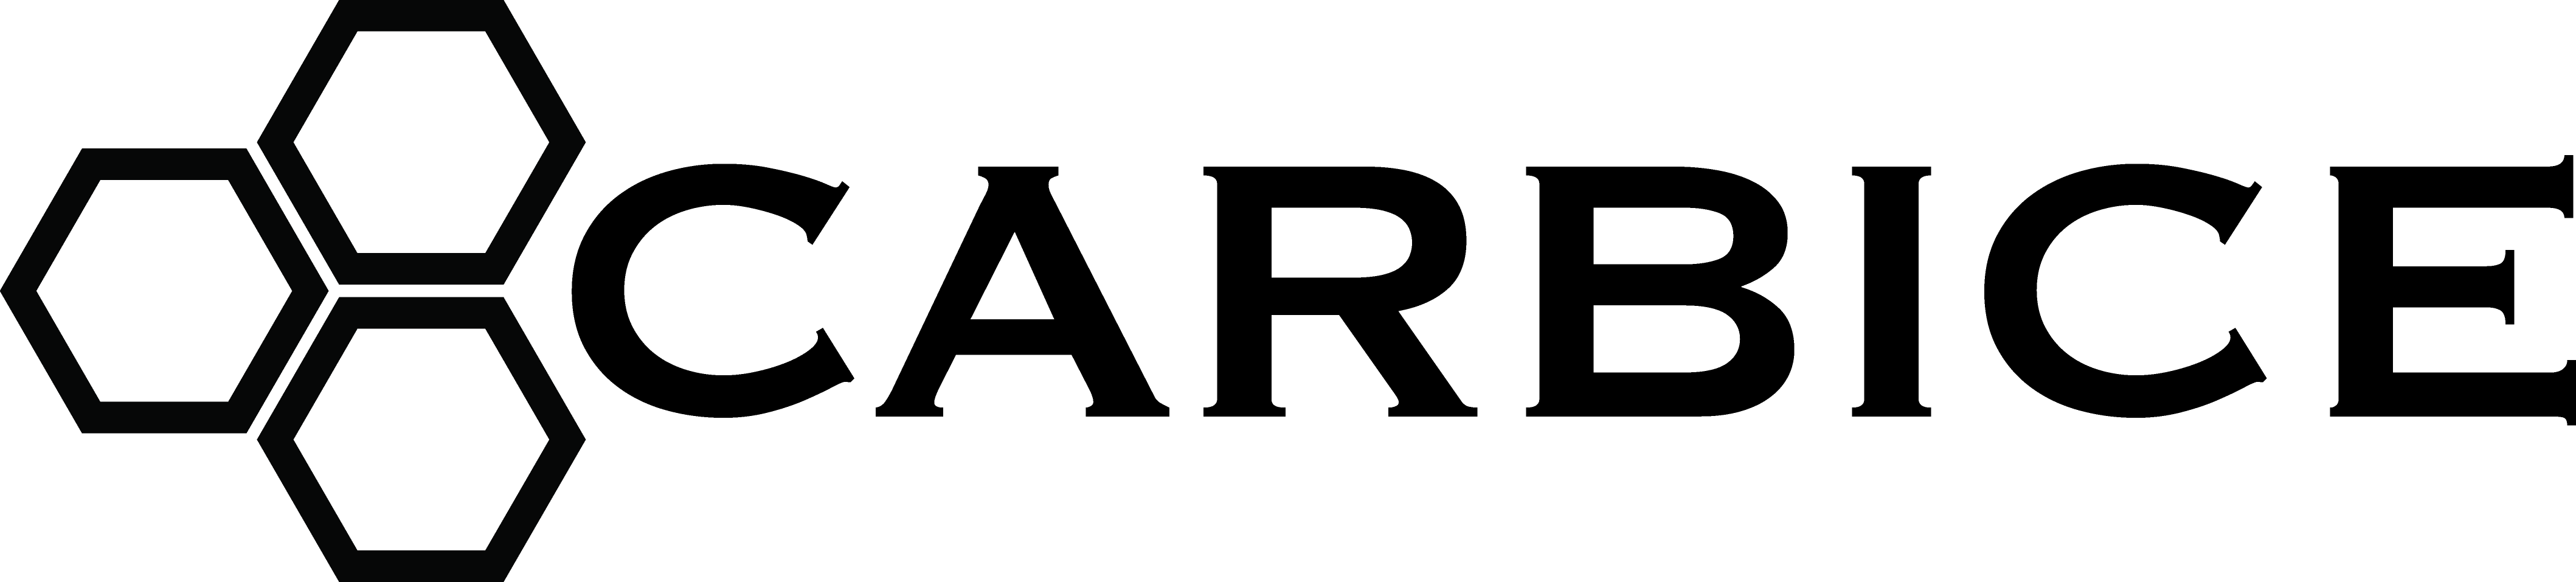 Carbice logo